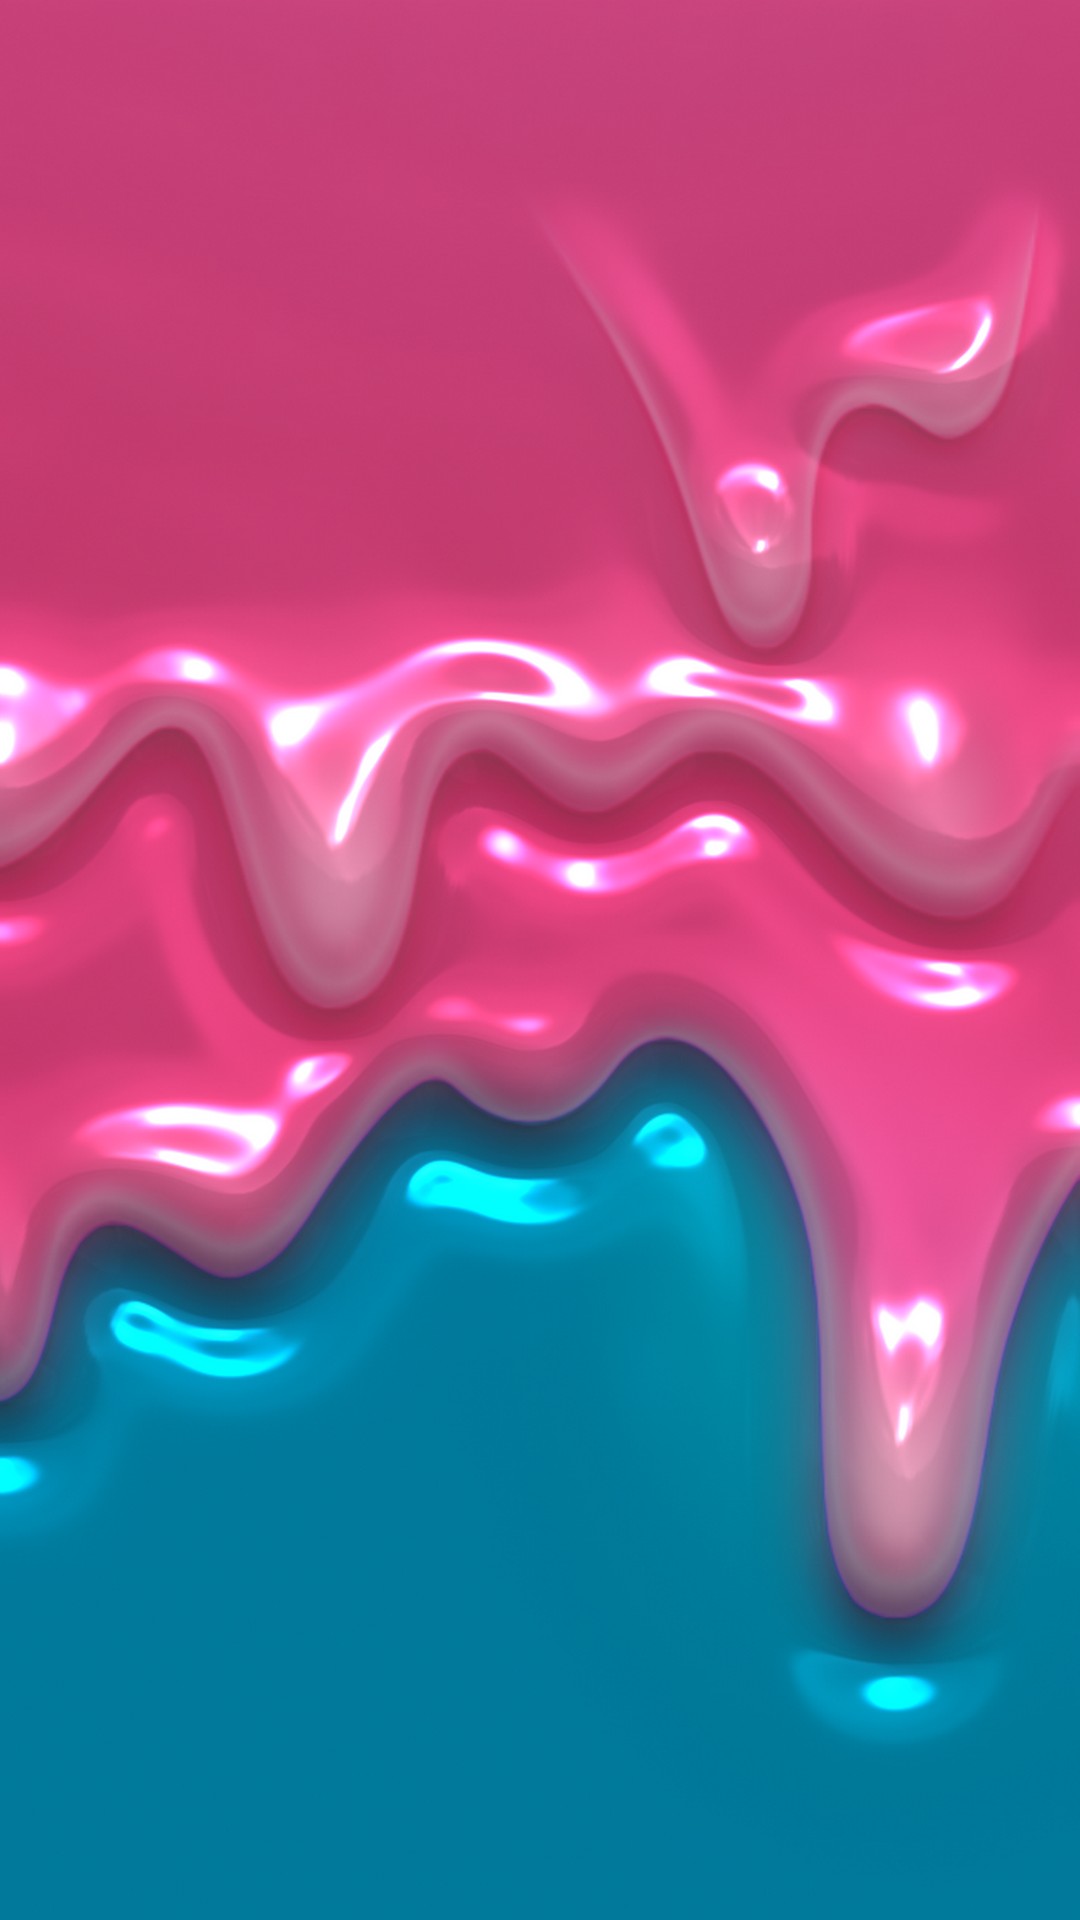 iPhone X Pink Liquid Wallpaper resolution 1080x1920